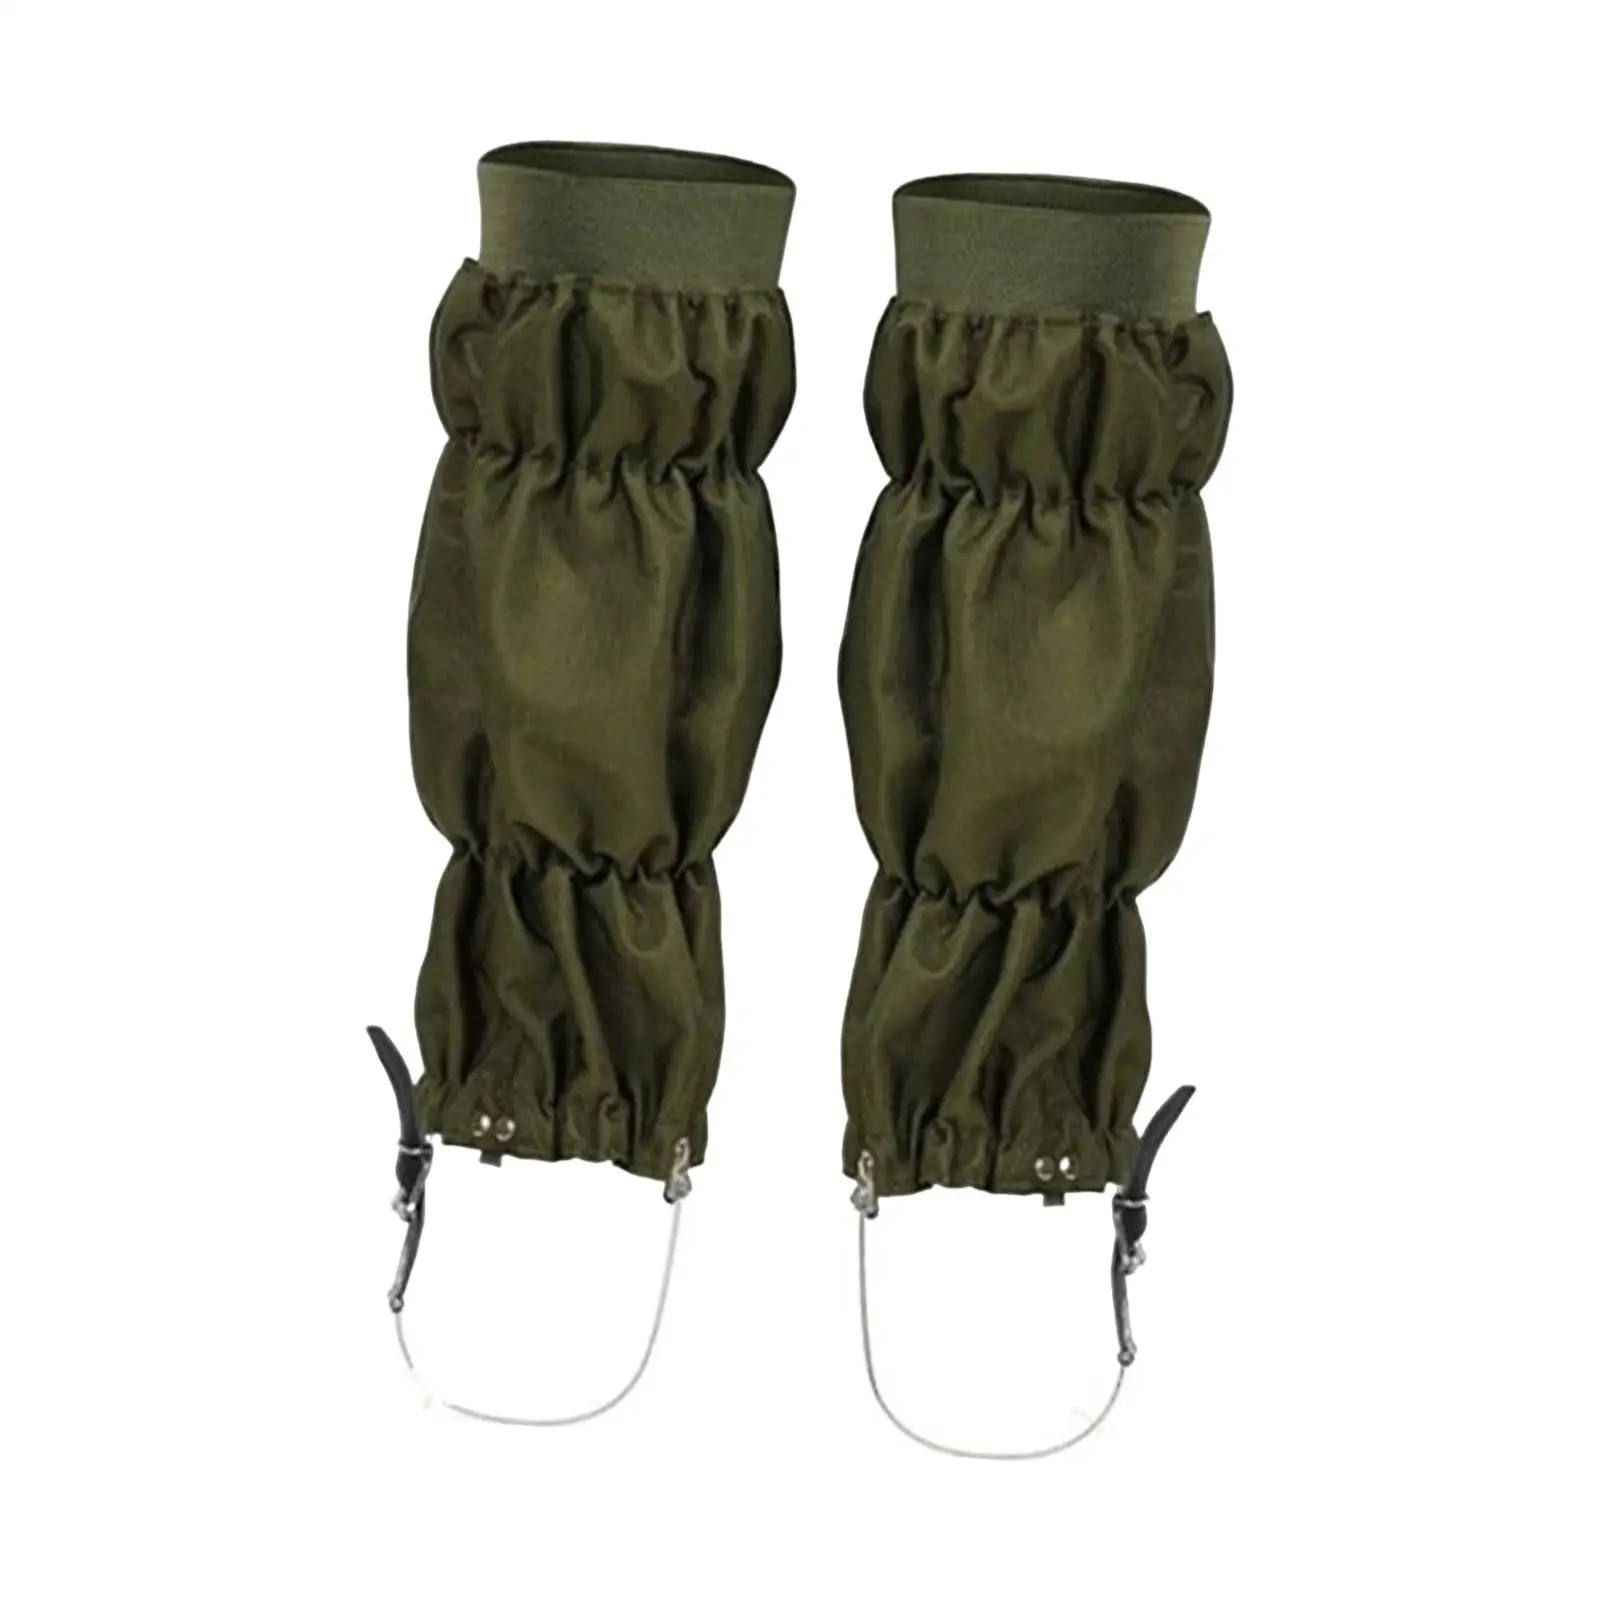 Lightweight Leg Cover Men Women Adjustable Snowproof Waterproof Shoe Cover for Outdoor Camping Walking Trekking Backpacking